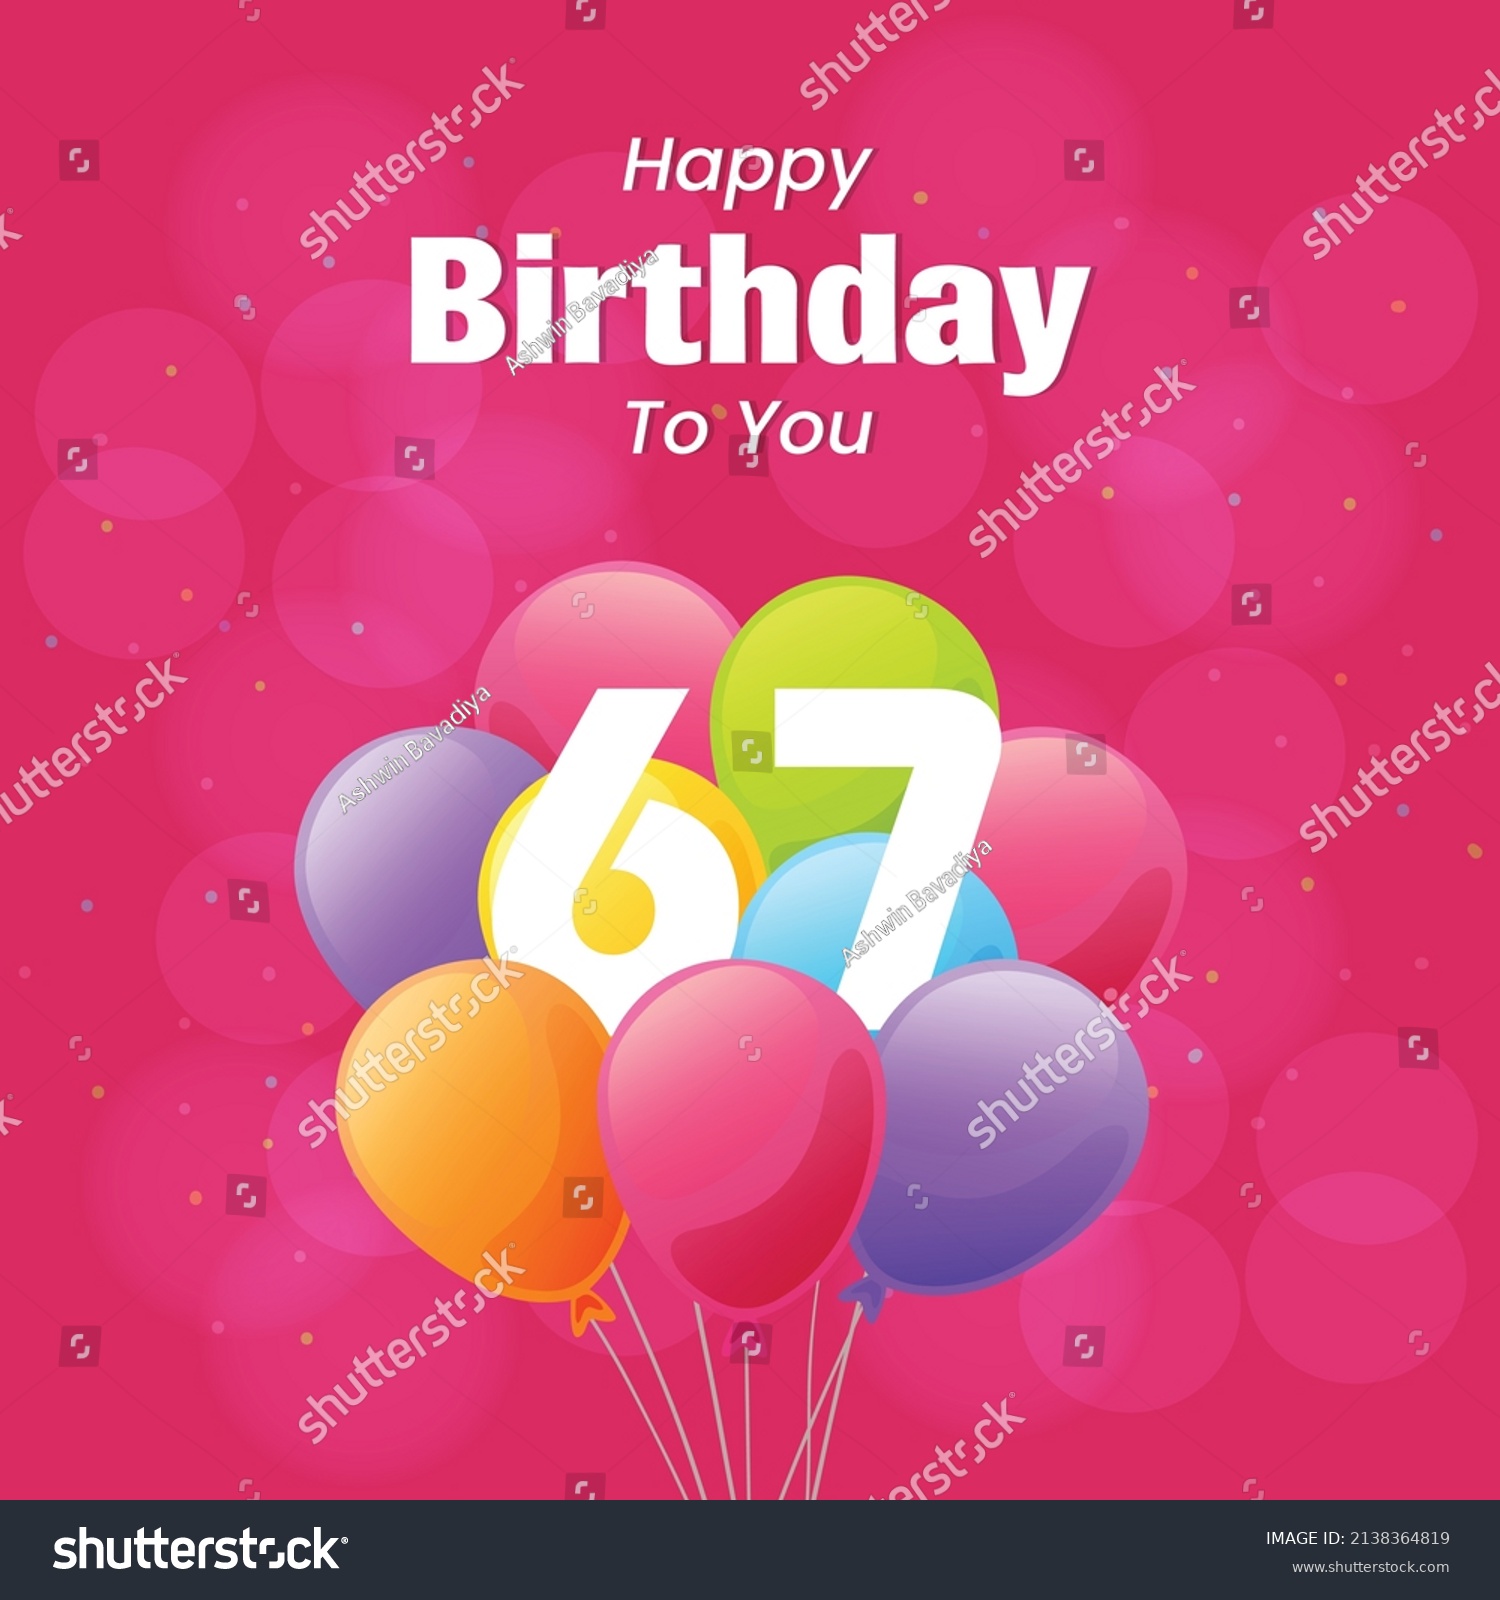 Happy 67th birthday, greeting card, vector illustration design.
 #2138364819